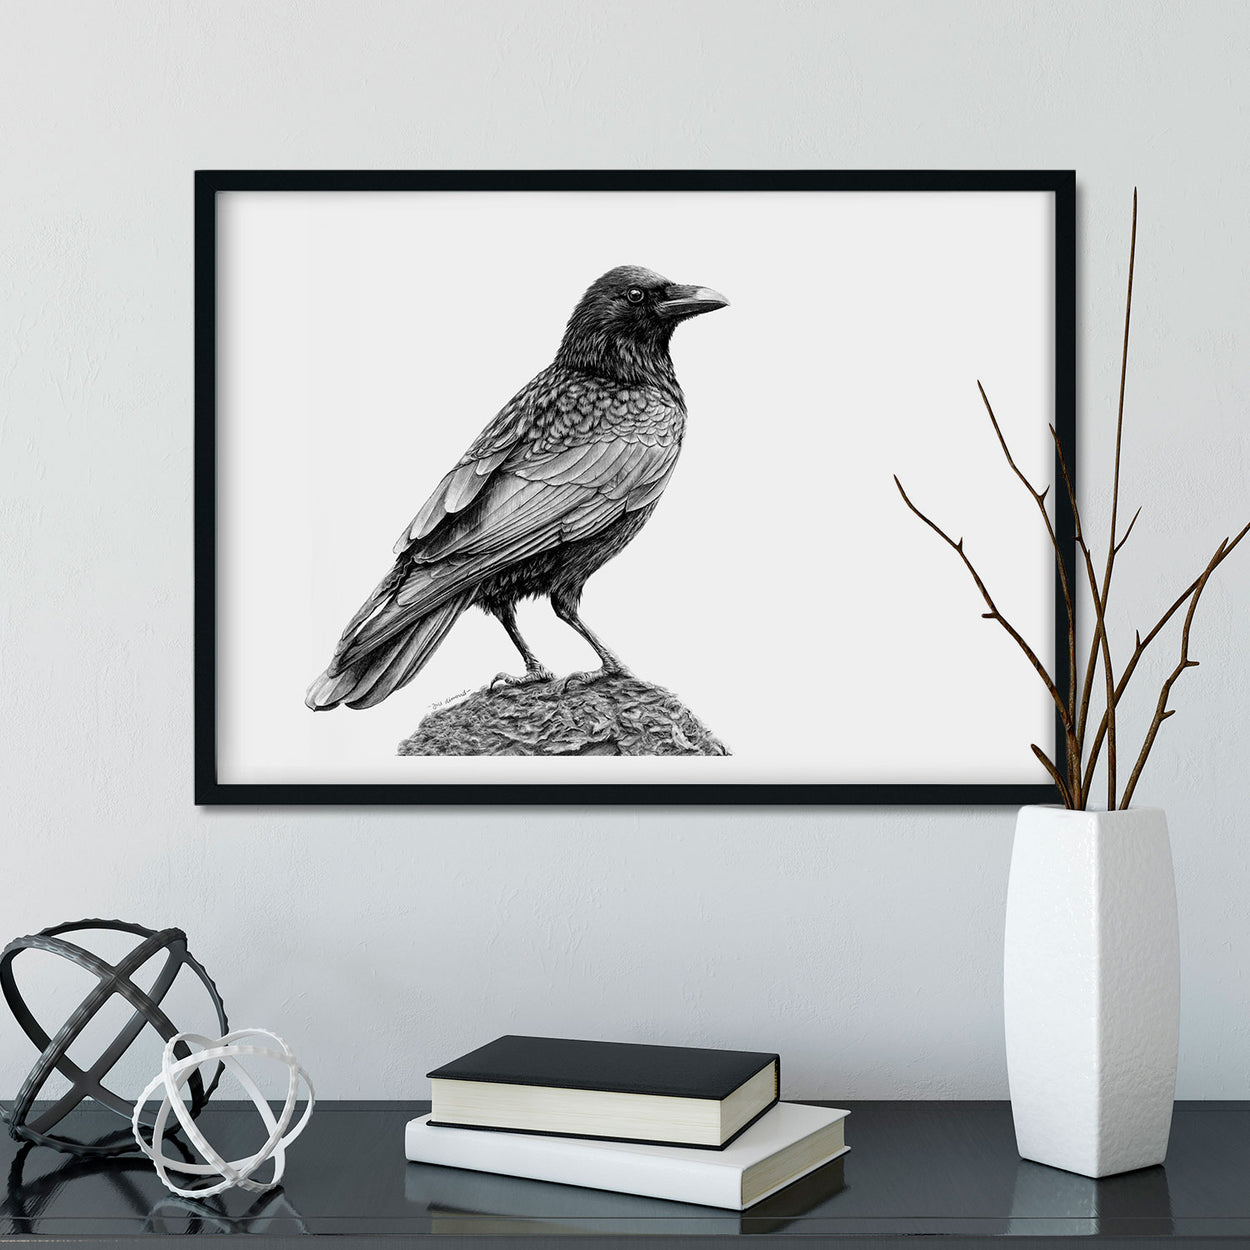 Balthazar the Crow Art Prints